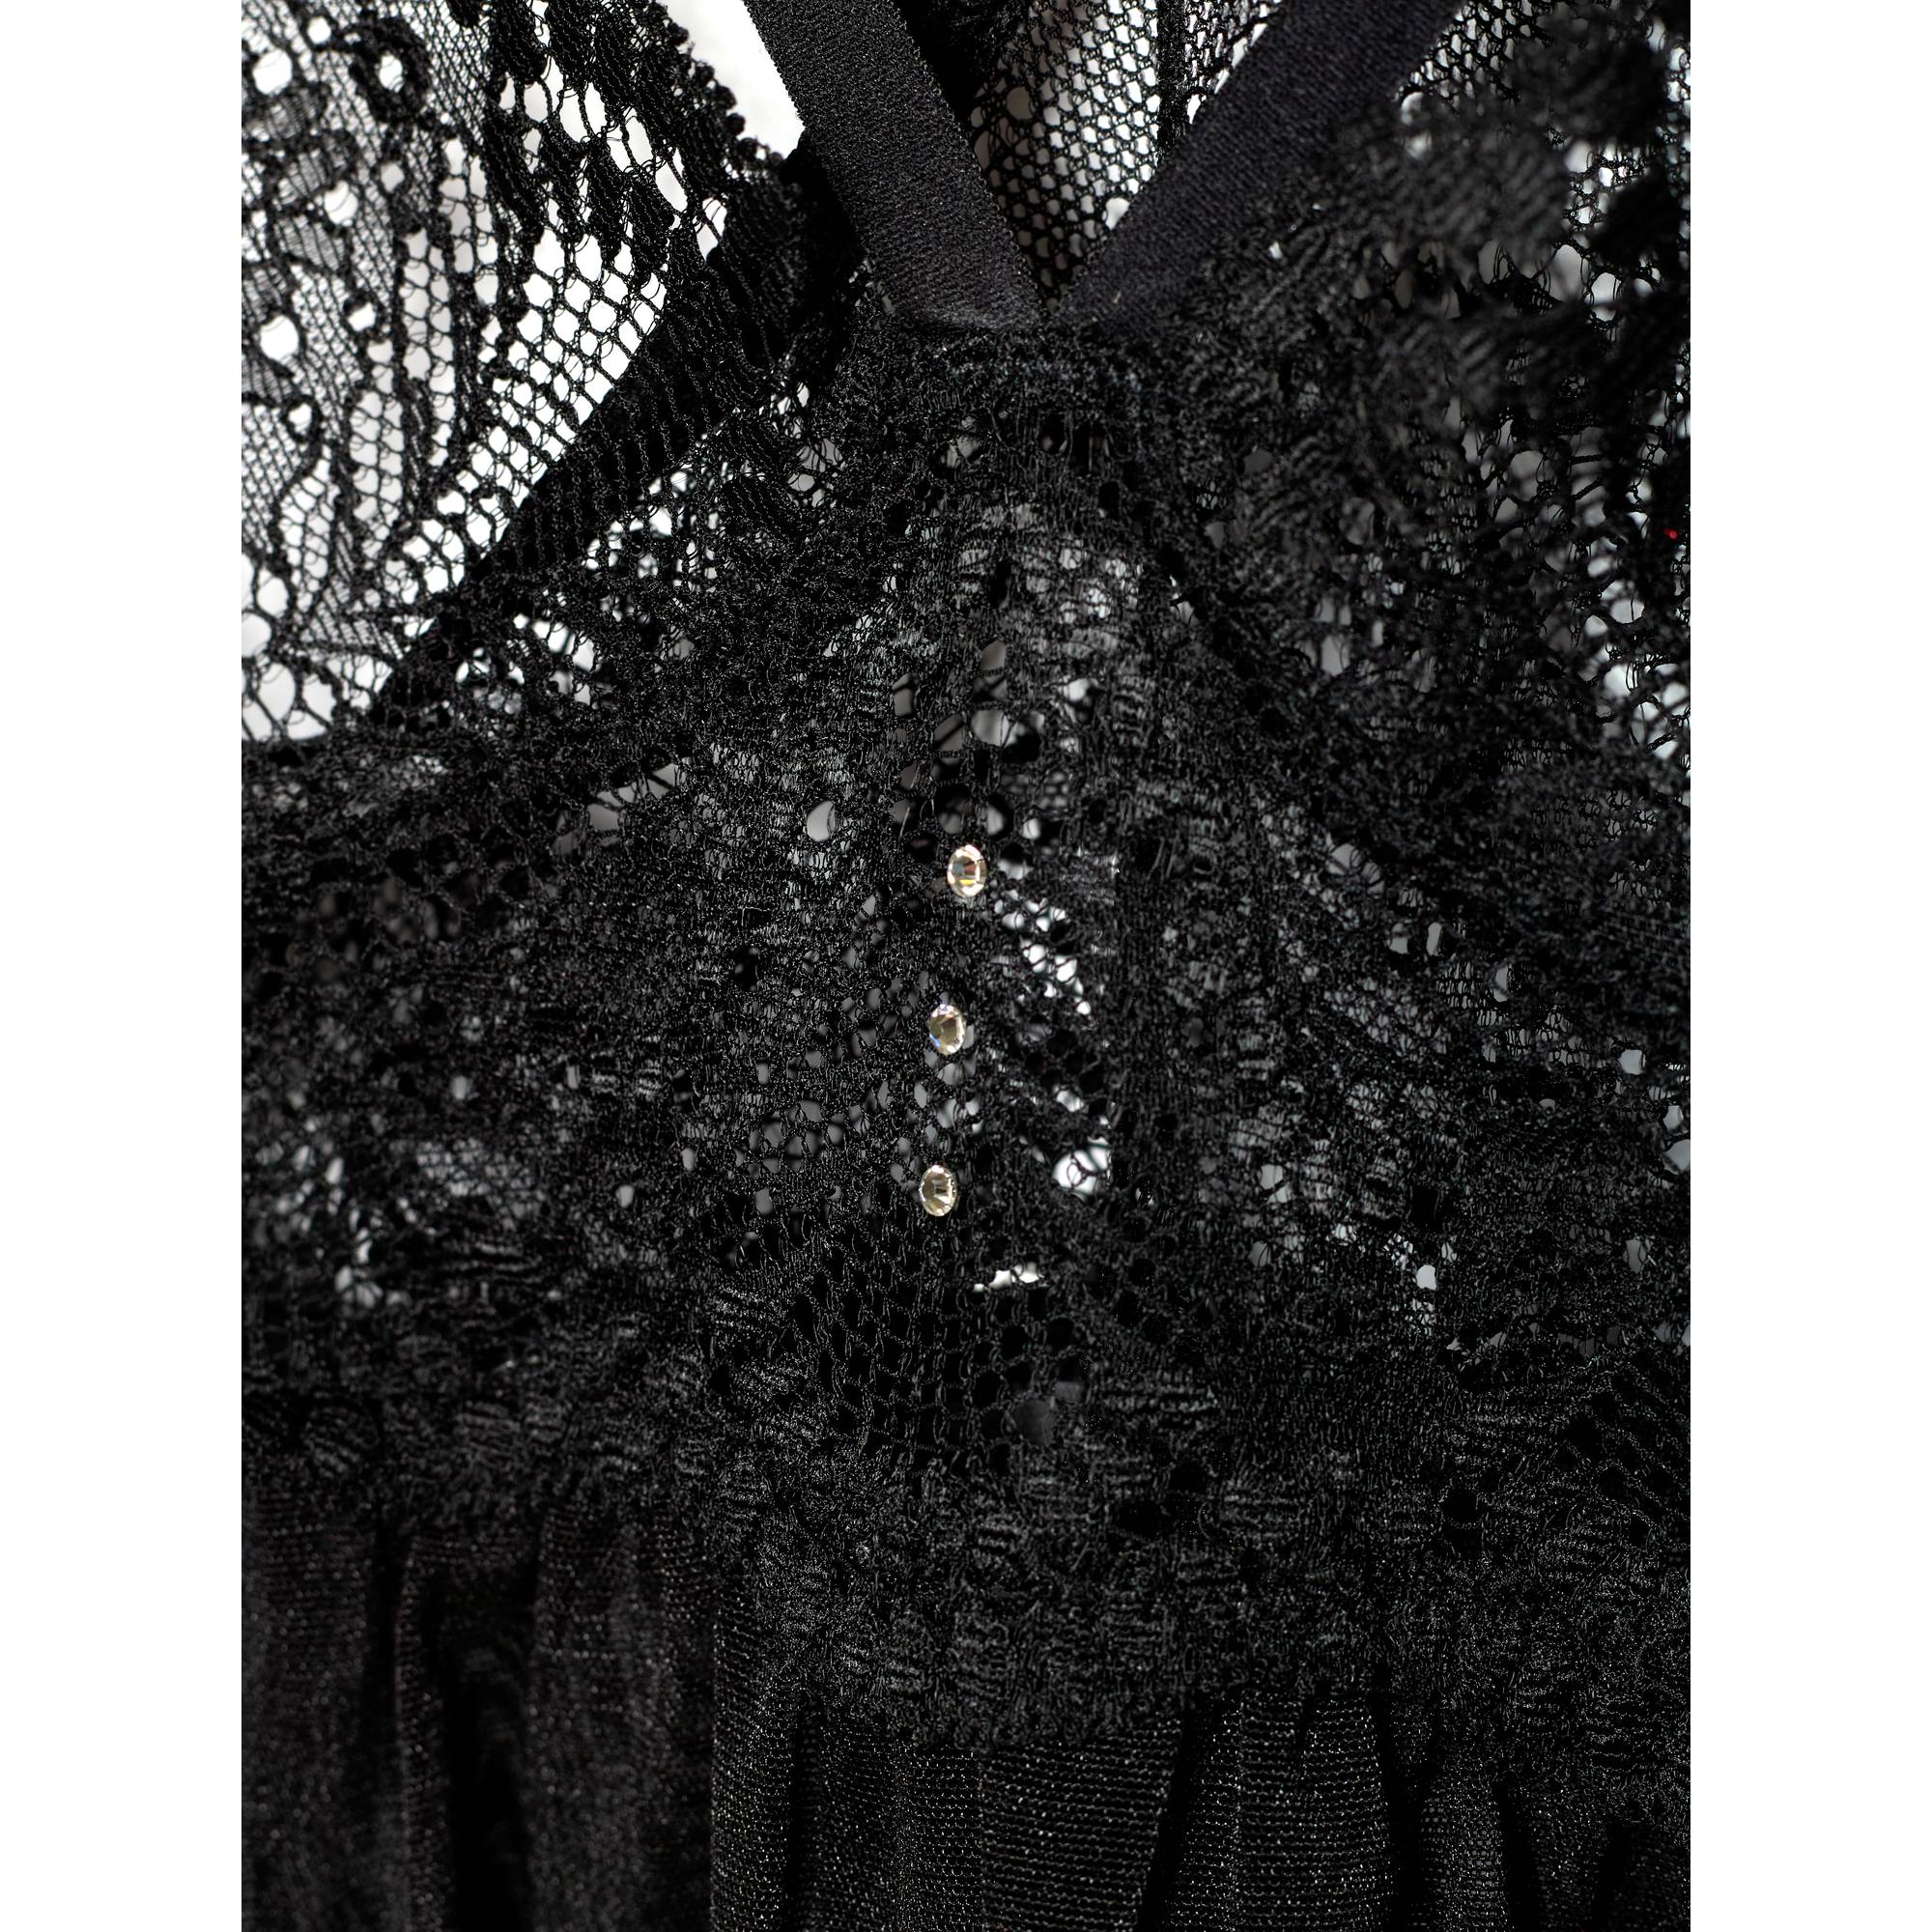 Сорочка ночная женская CONTE ELEGANT SWAROWSKI LHW 1087 royal black